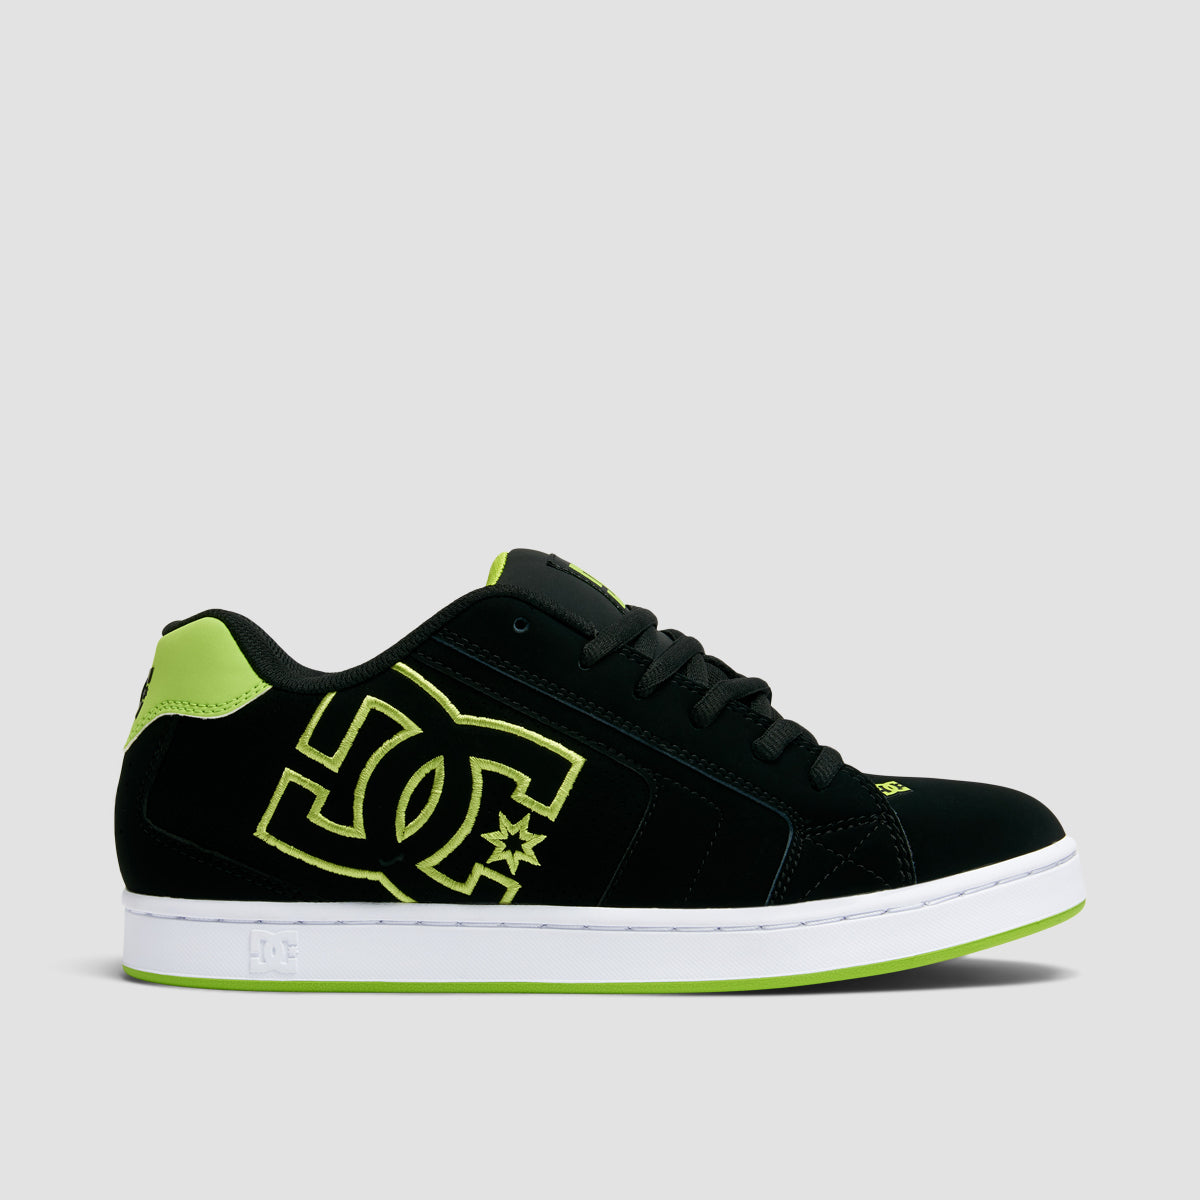 DC Net Shoes - Black/Lime Green